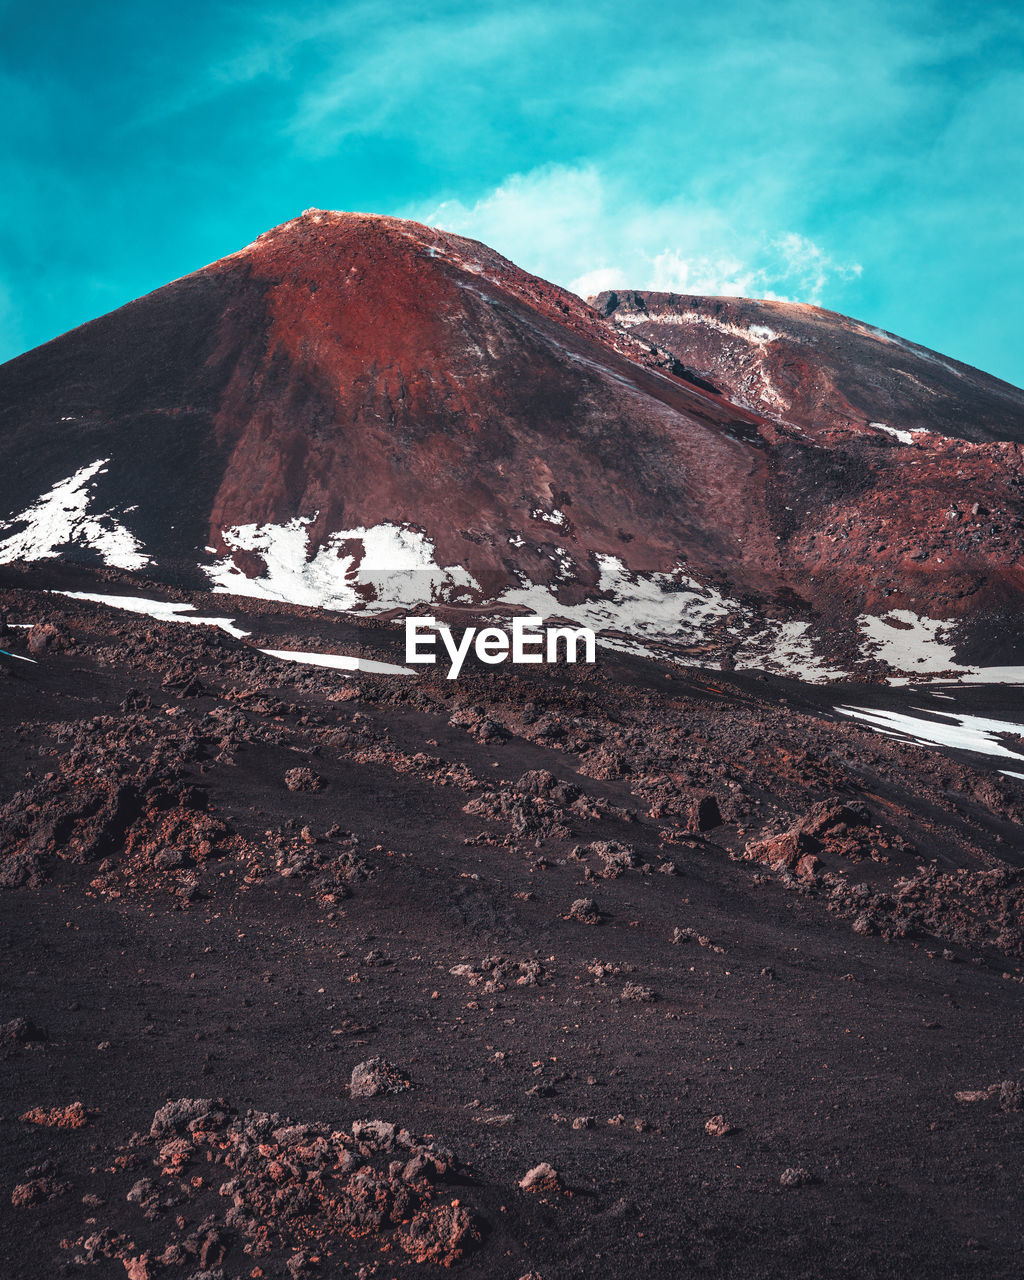 Etna, volcano, vulkan, mountain, snow, rocks, rock formation